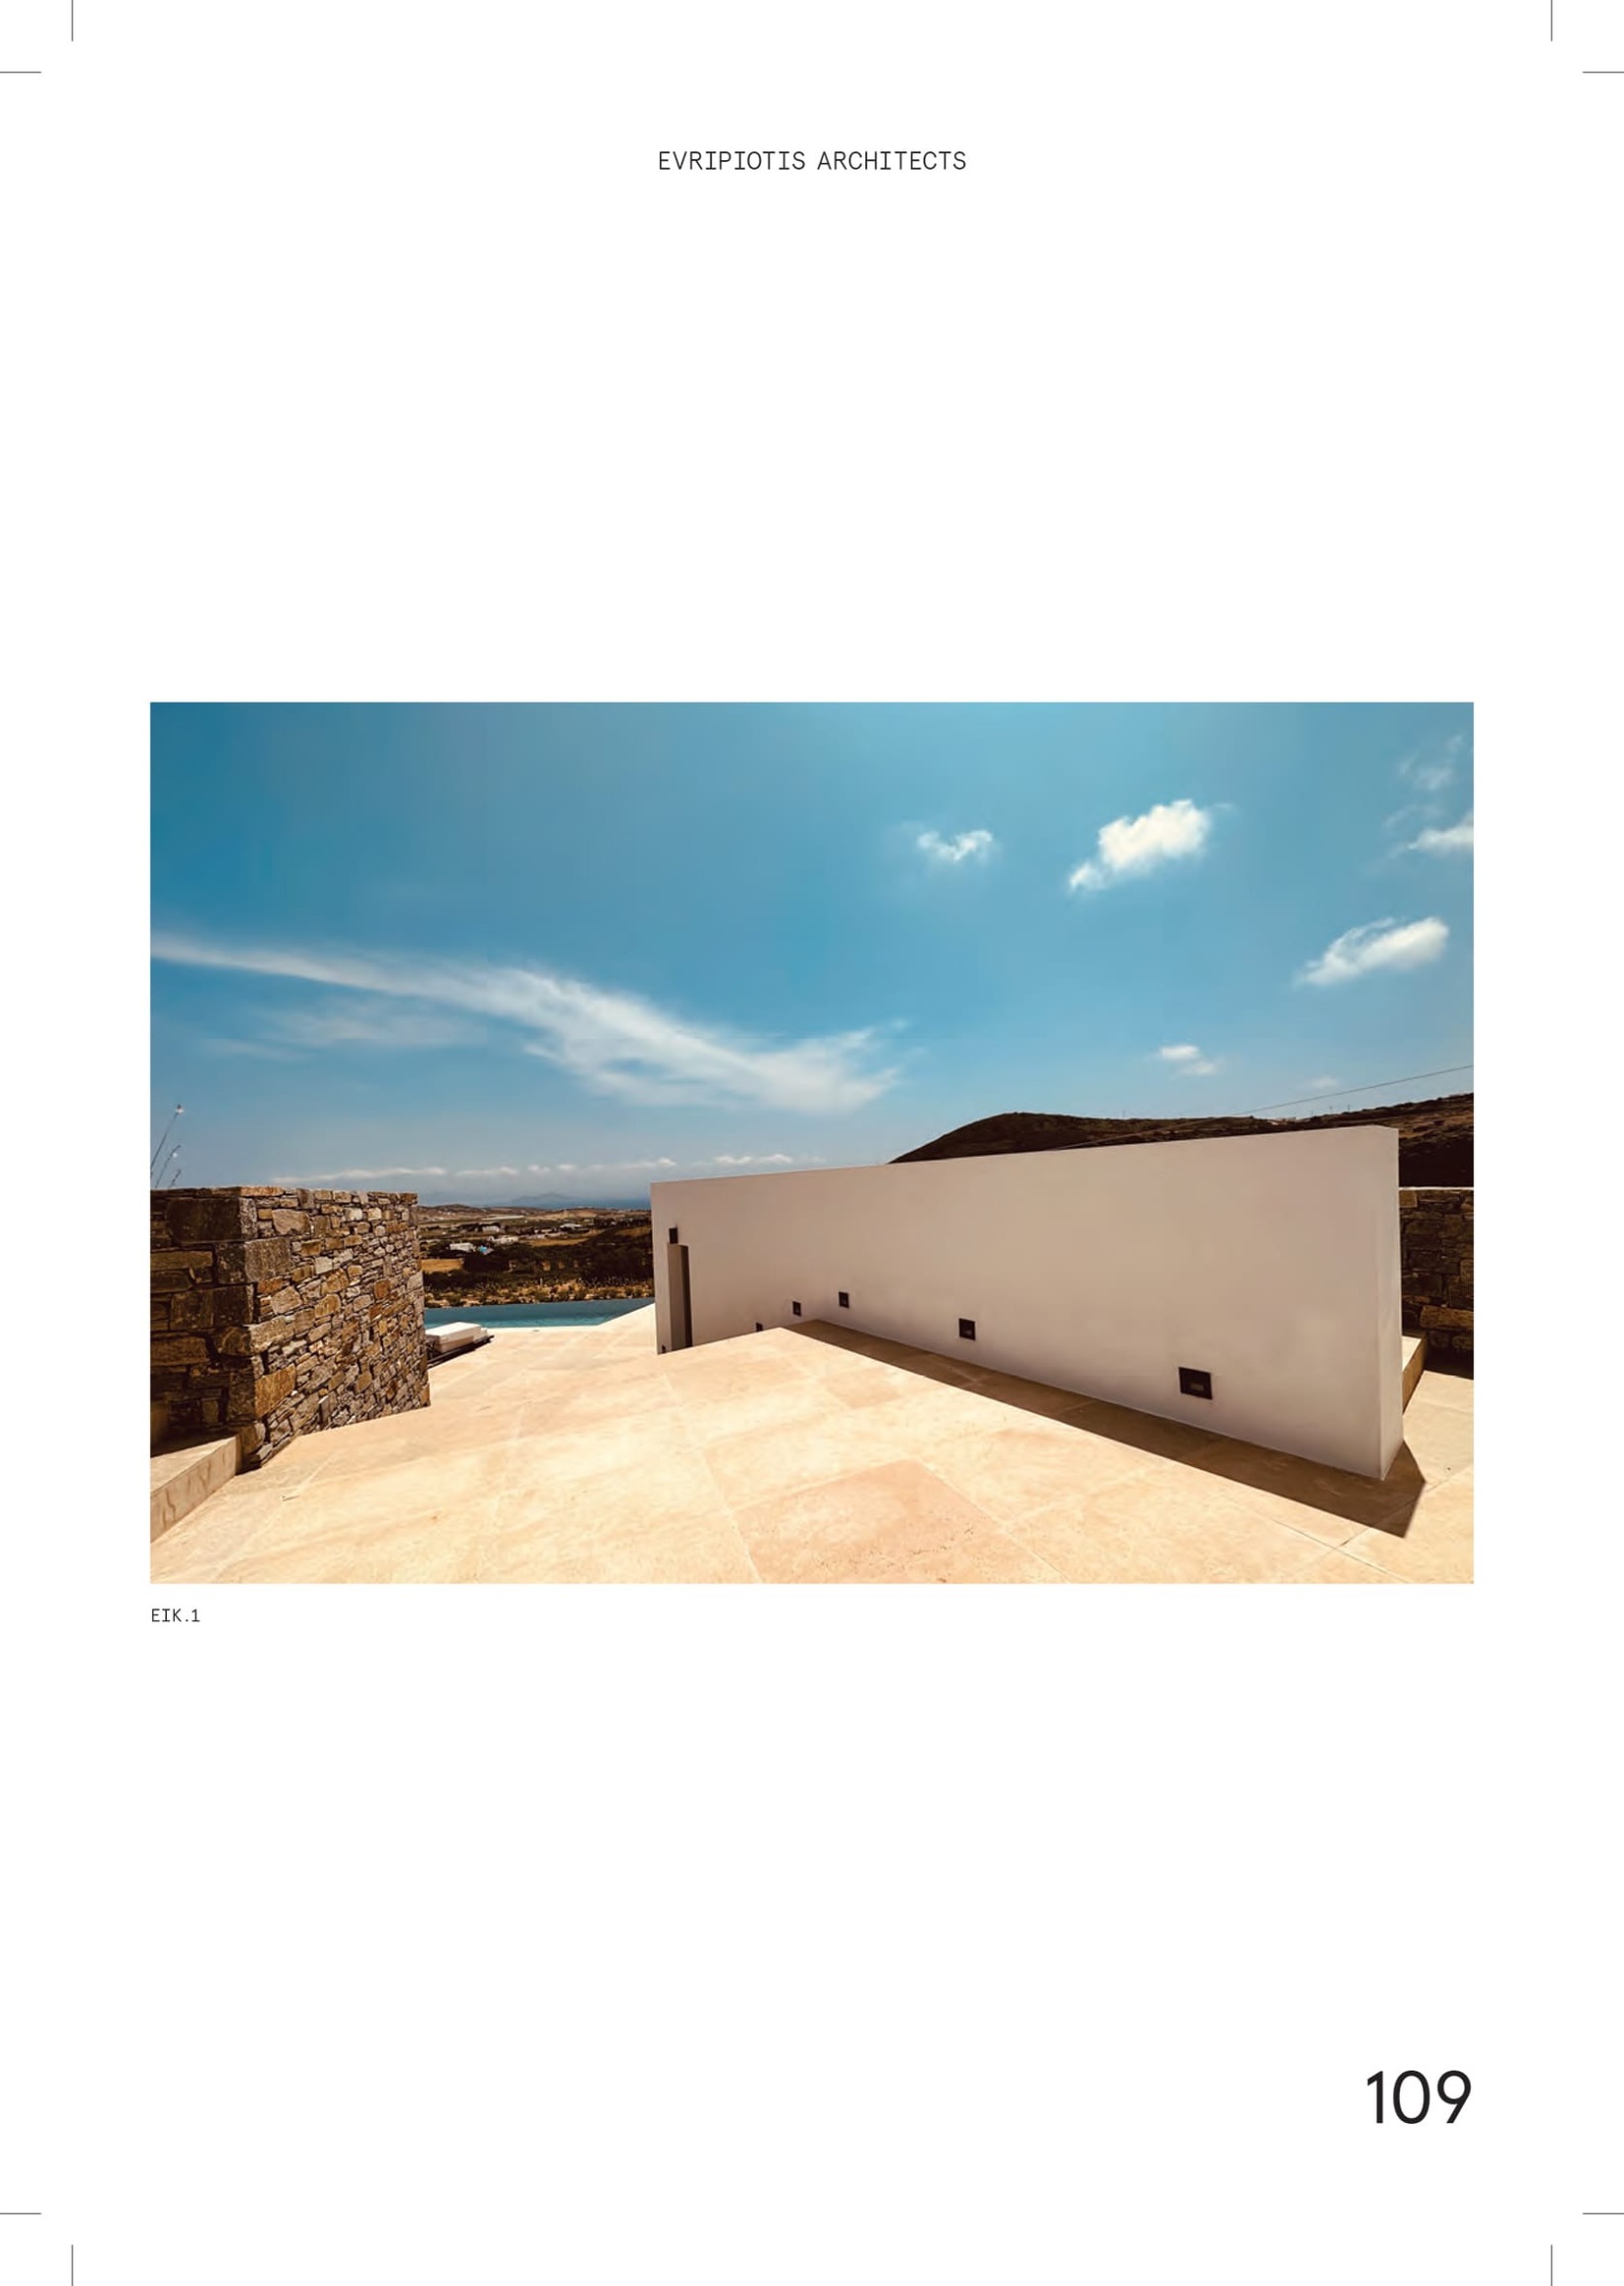 domes-168-hill-house-evripiotis-architects-P02